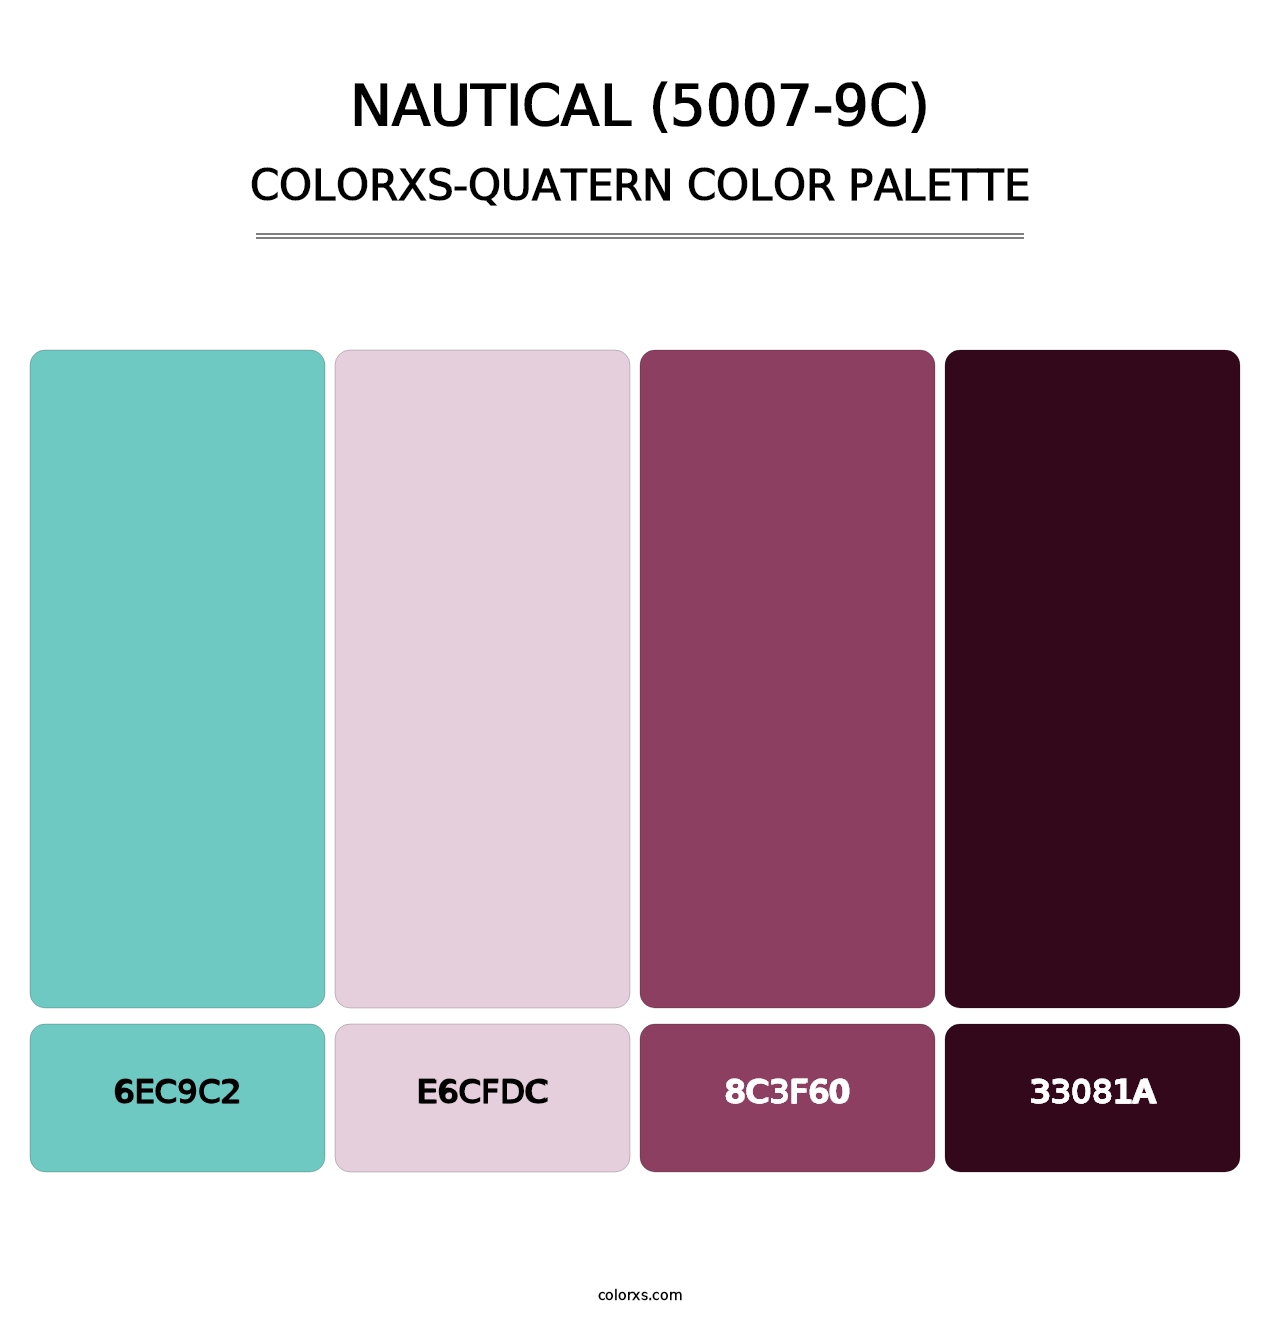 Nautical (5007-9C) - Colorxs Quatern Palette